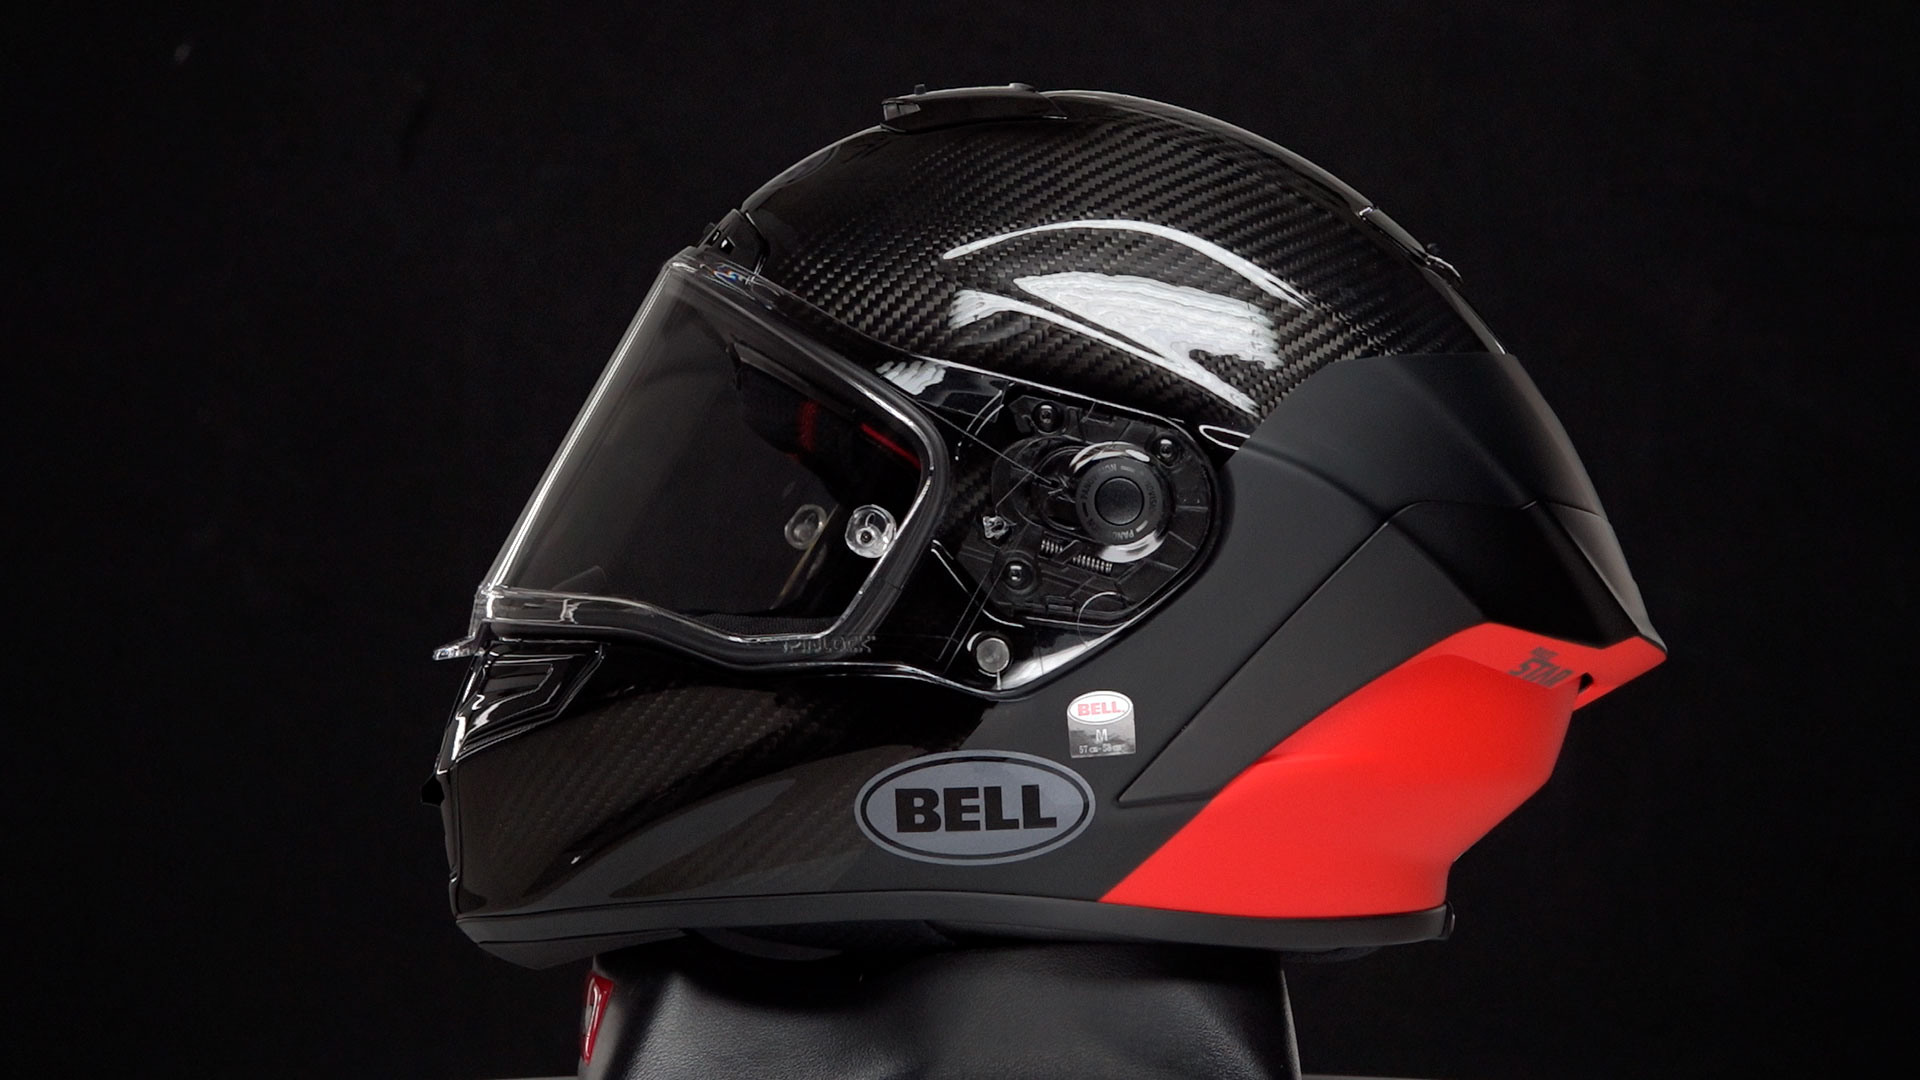 Casques moto Bell, lequel choisir ? Analyse et avis · Motocard